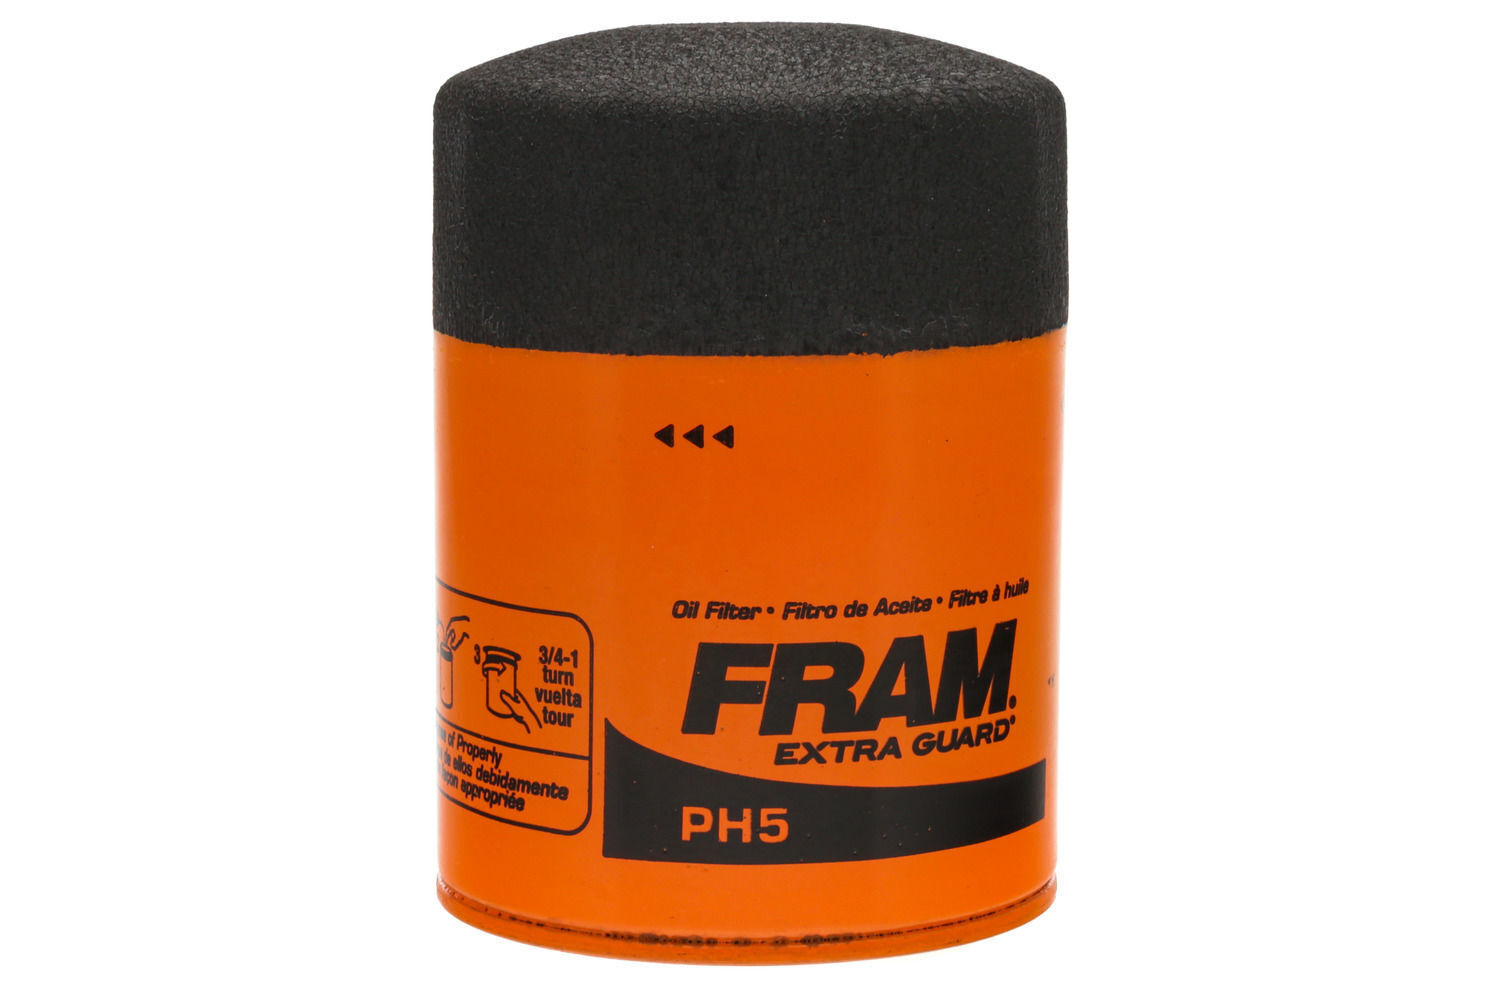 Engine Oil Filter-Extra Guard Fram PH5